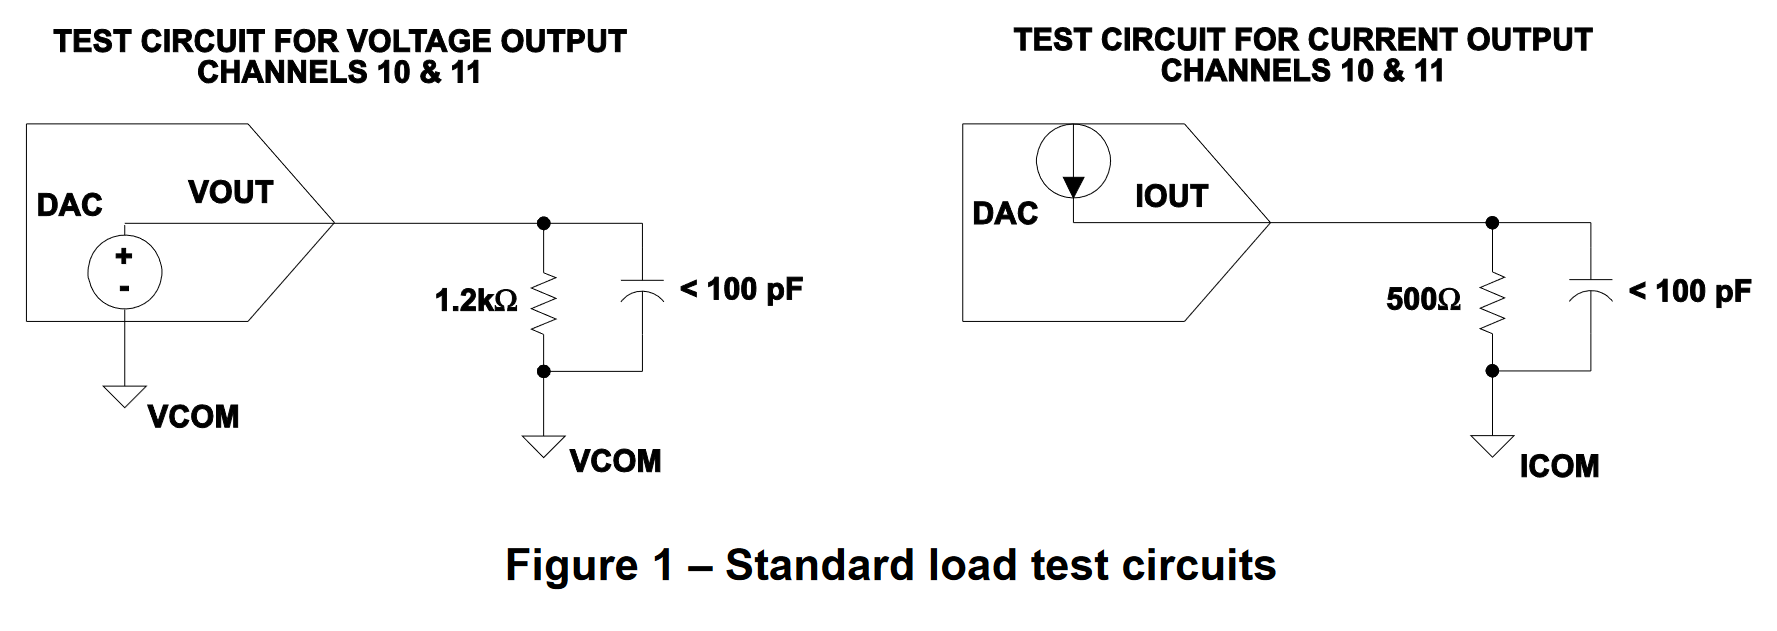 Standard load test circuits